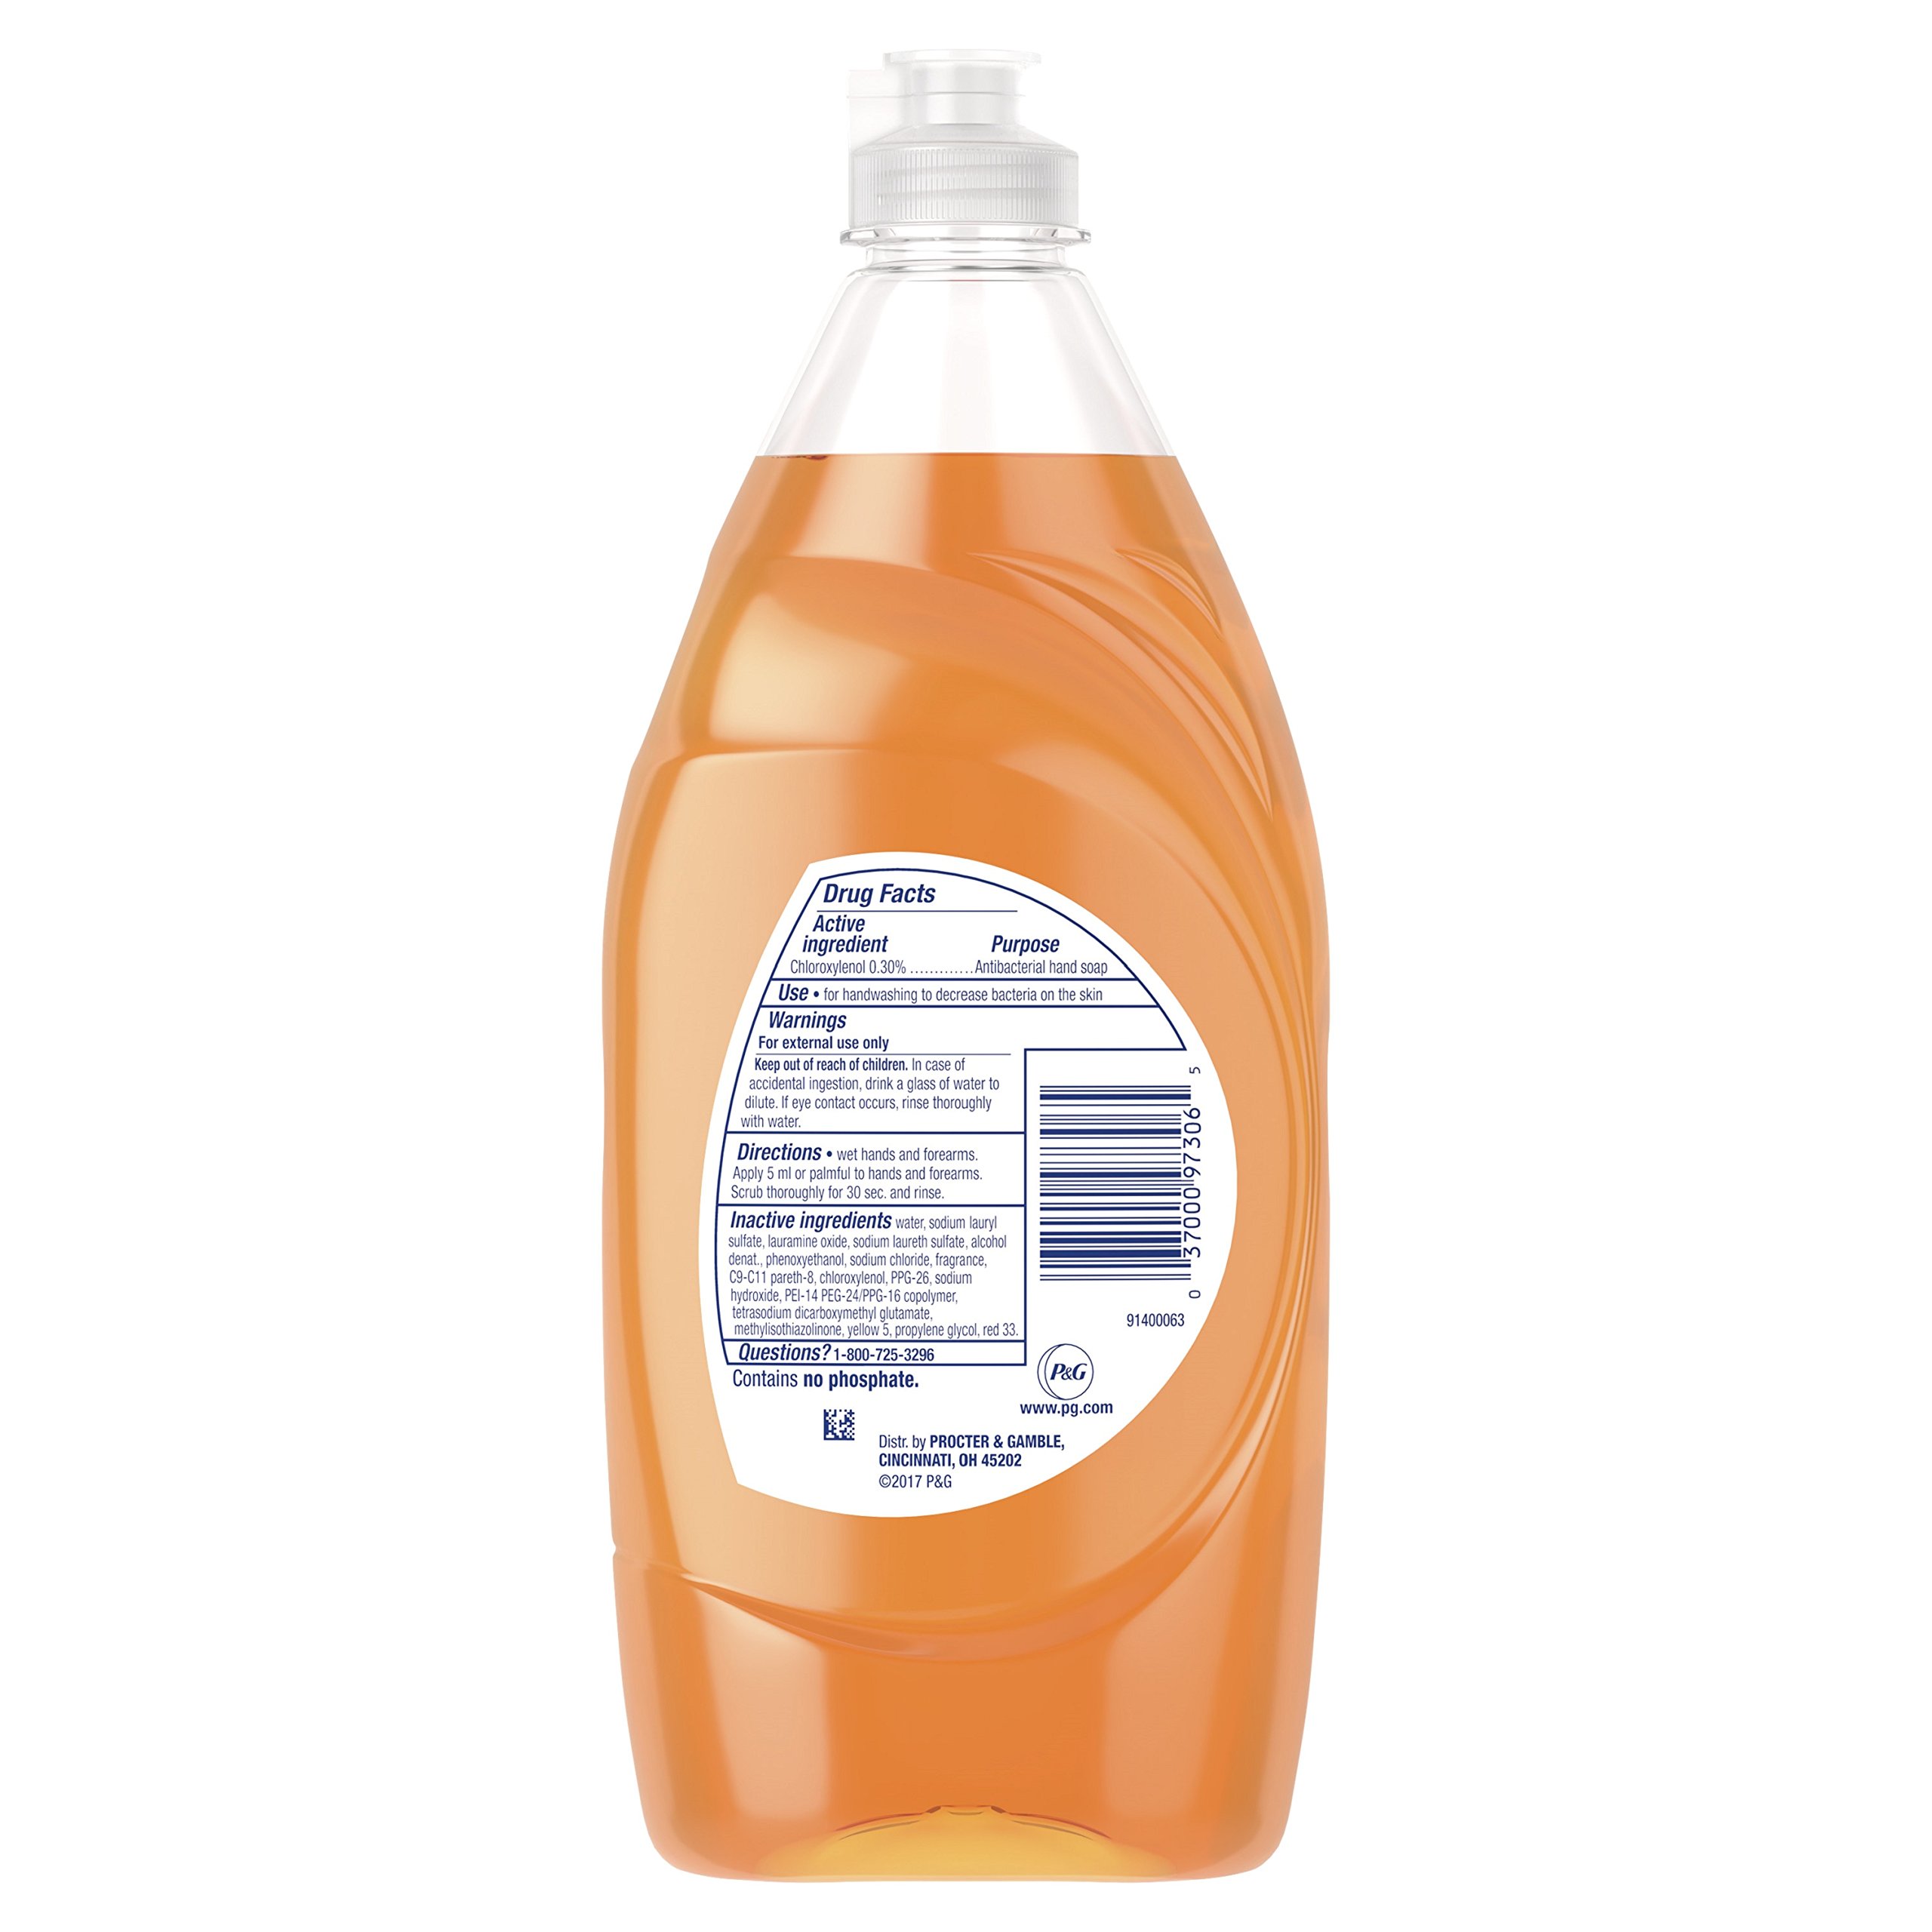 Dawn Ultra Antibacterial Hand Soap, Dishwashing Liquid Dish Soap Orange 19.4 oz (Packaging may vary)